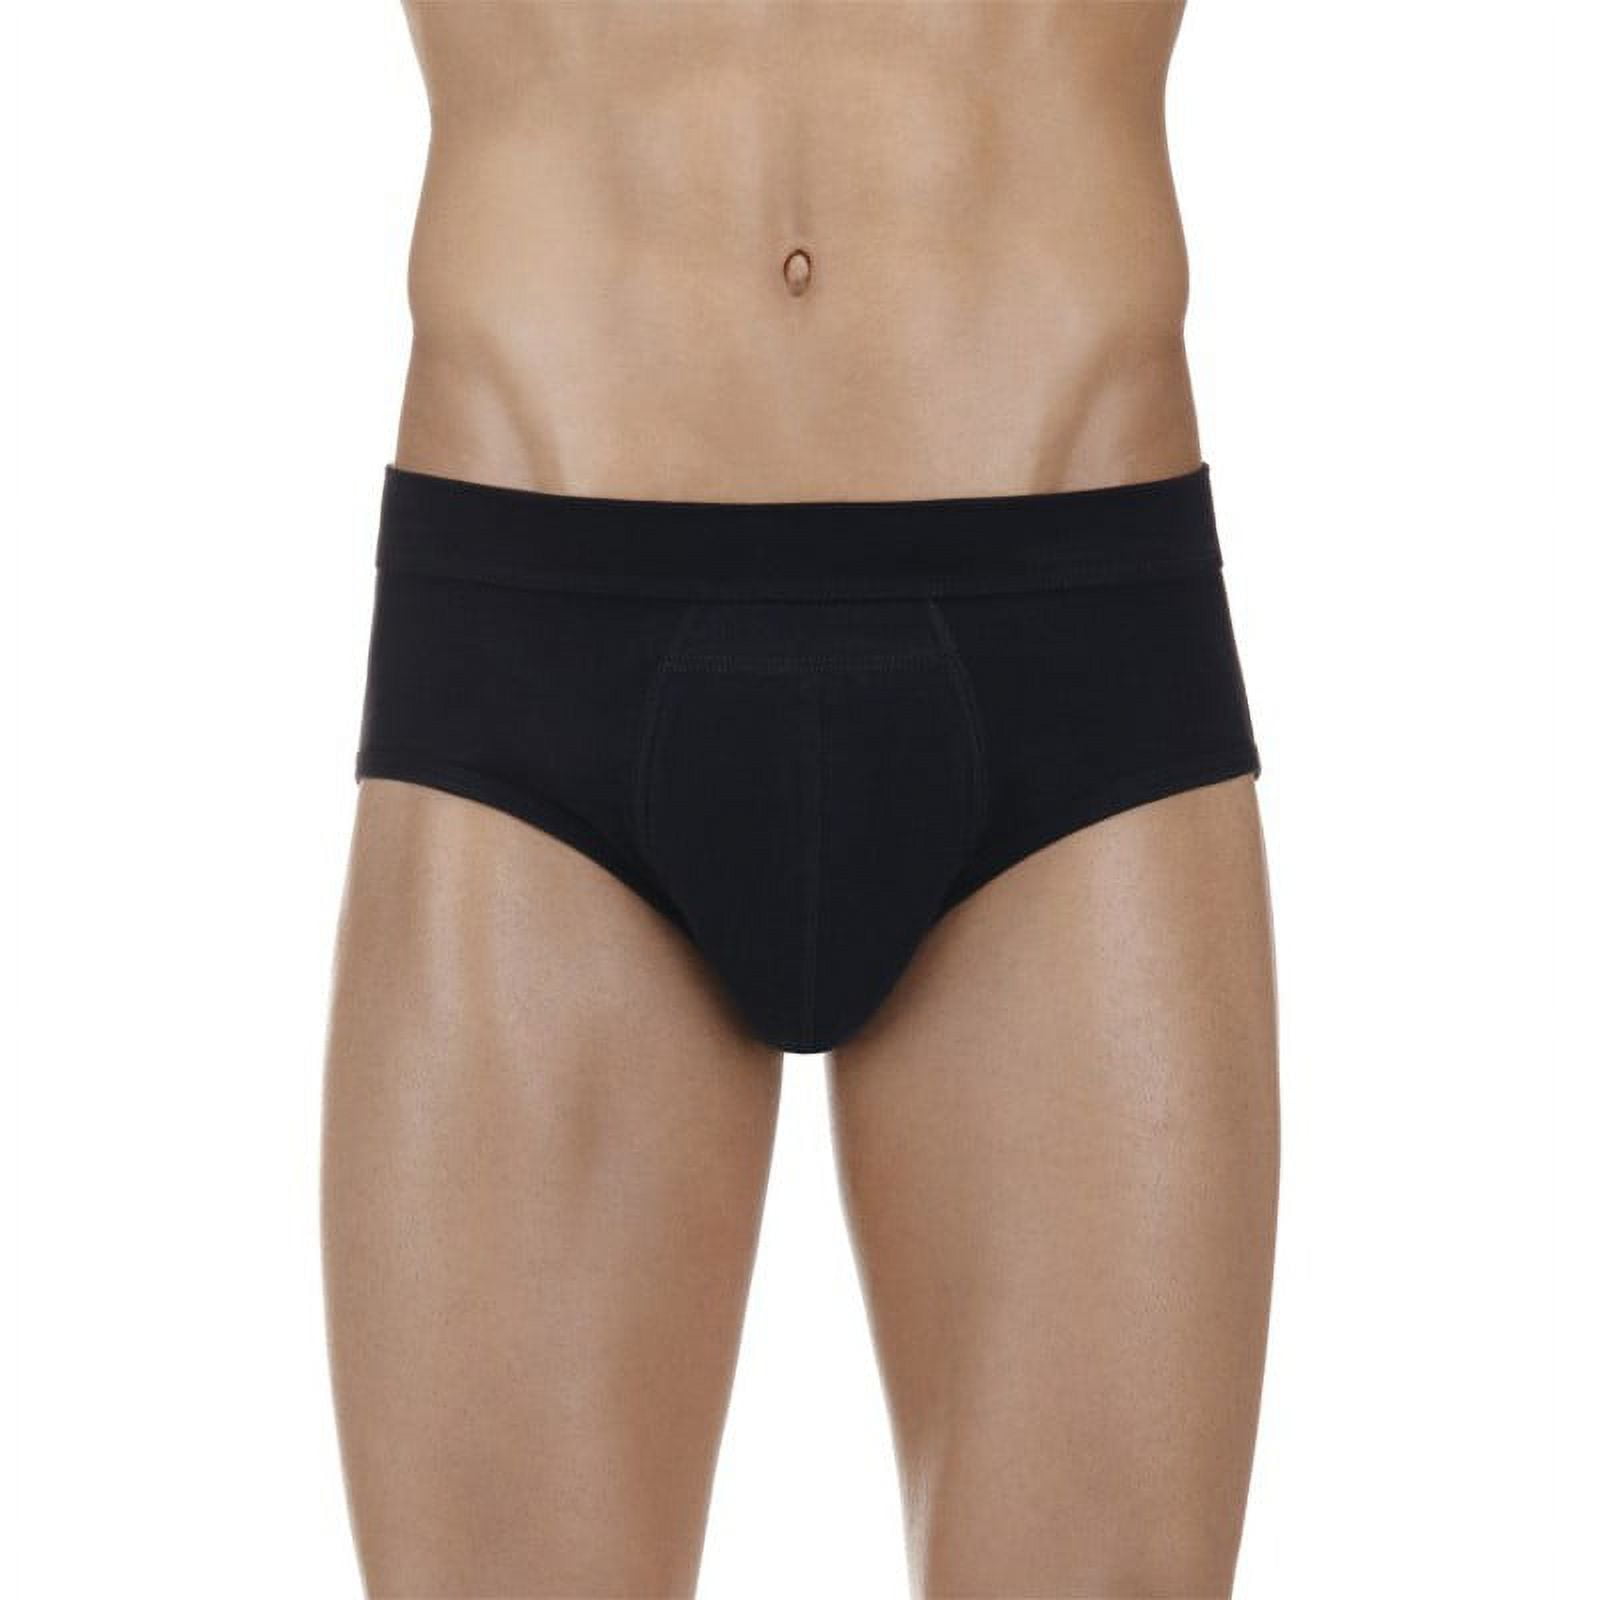 Althee Mesh Postpartum Underwear 10counts Disposable C-section Hospital Mesh  Panties Washable S-2xl